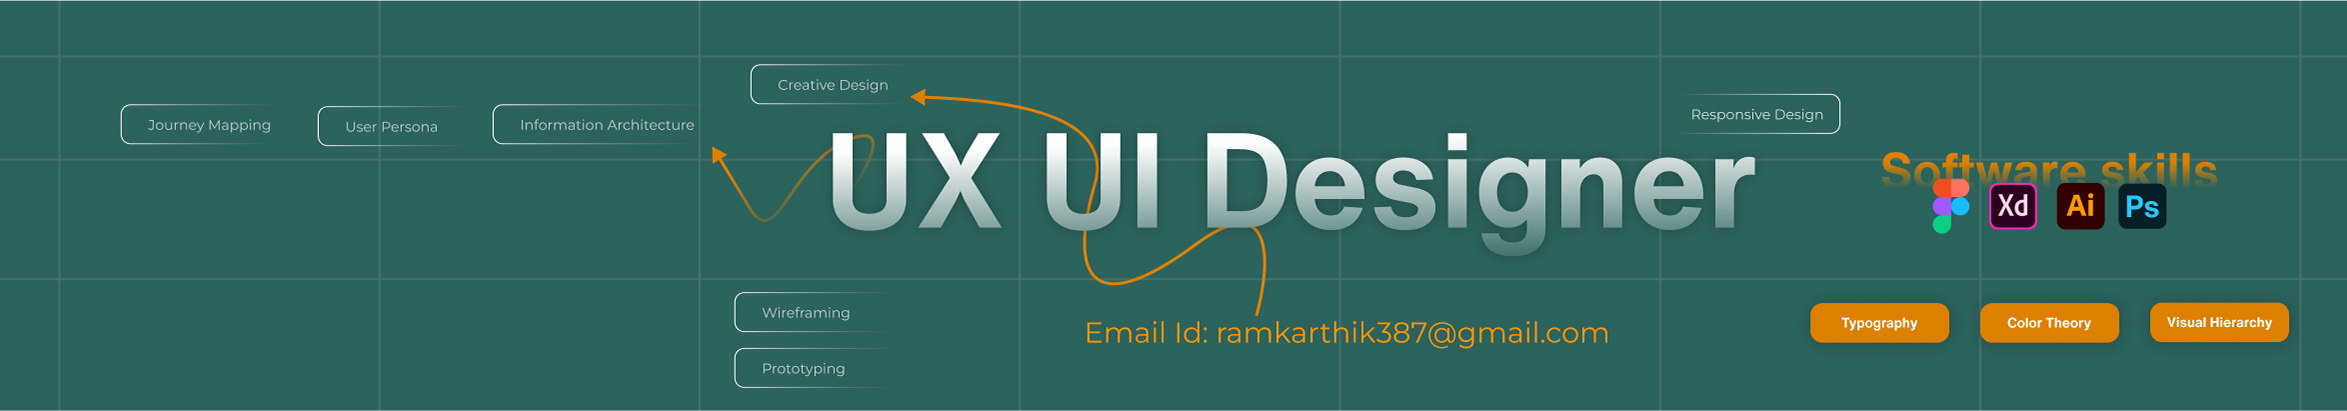 Karthik Ram UX/UI Designer 님의 프로필 배너